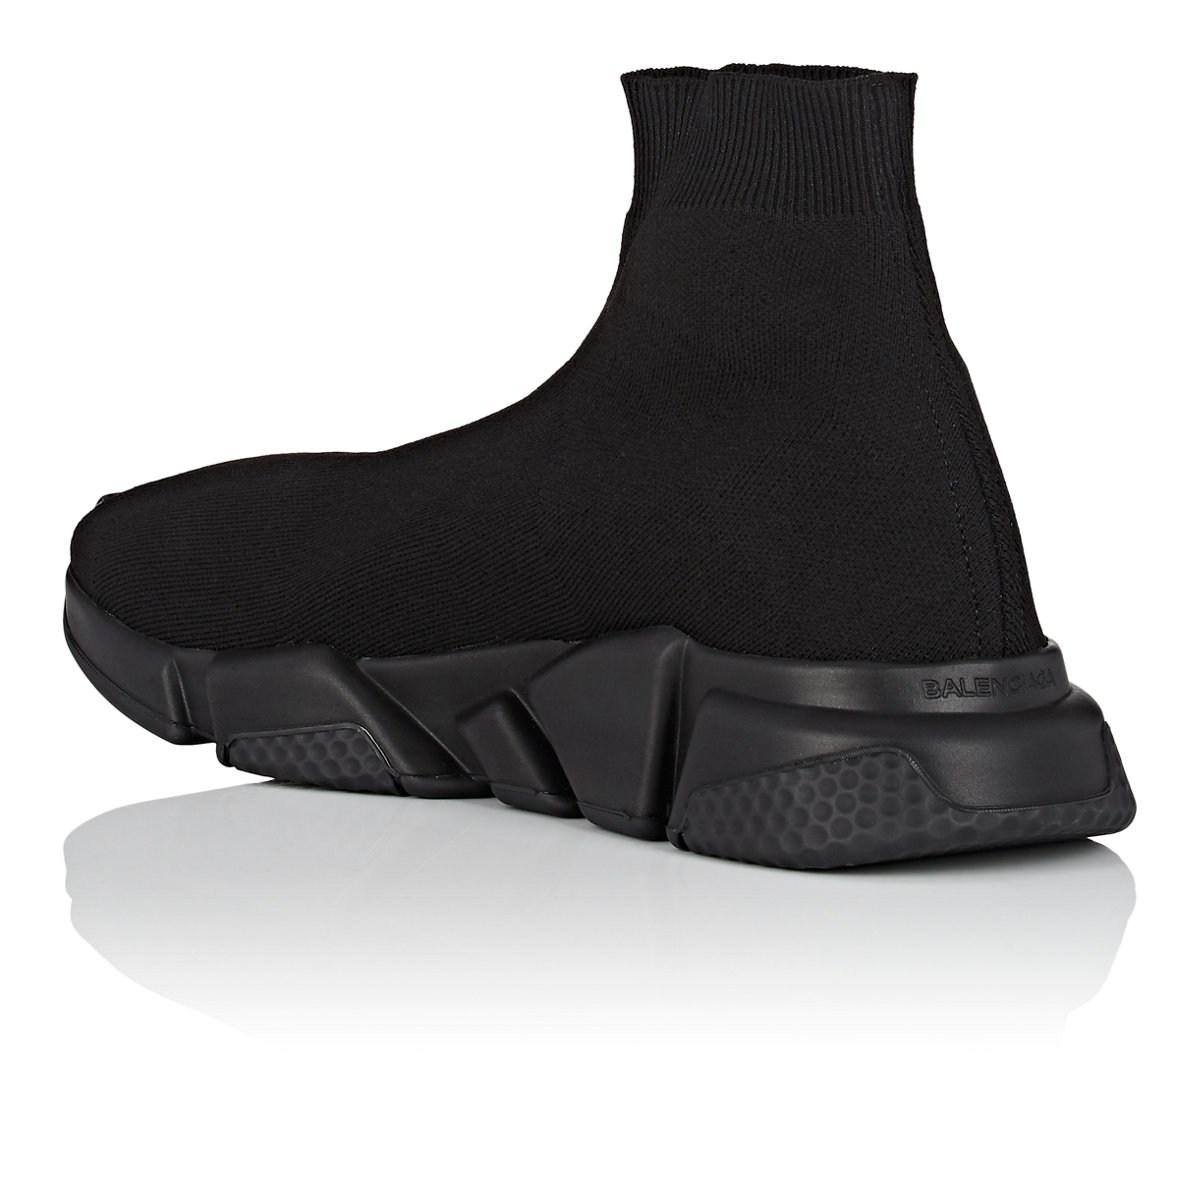 Balenciaga Speed Knit Sneakers in Black for Men - Lyst